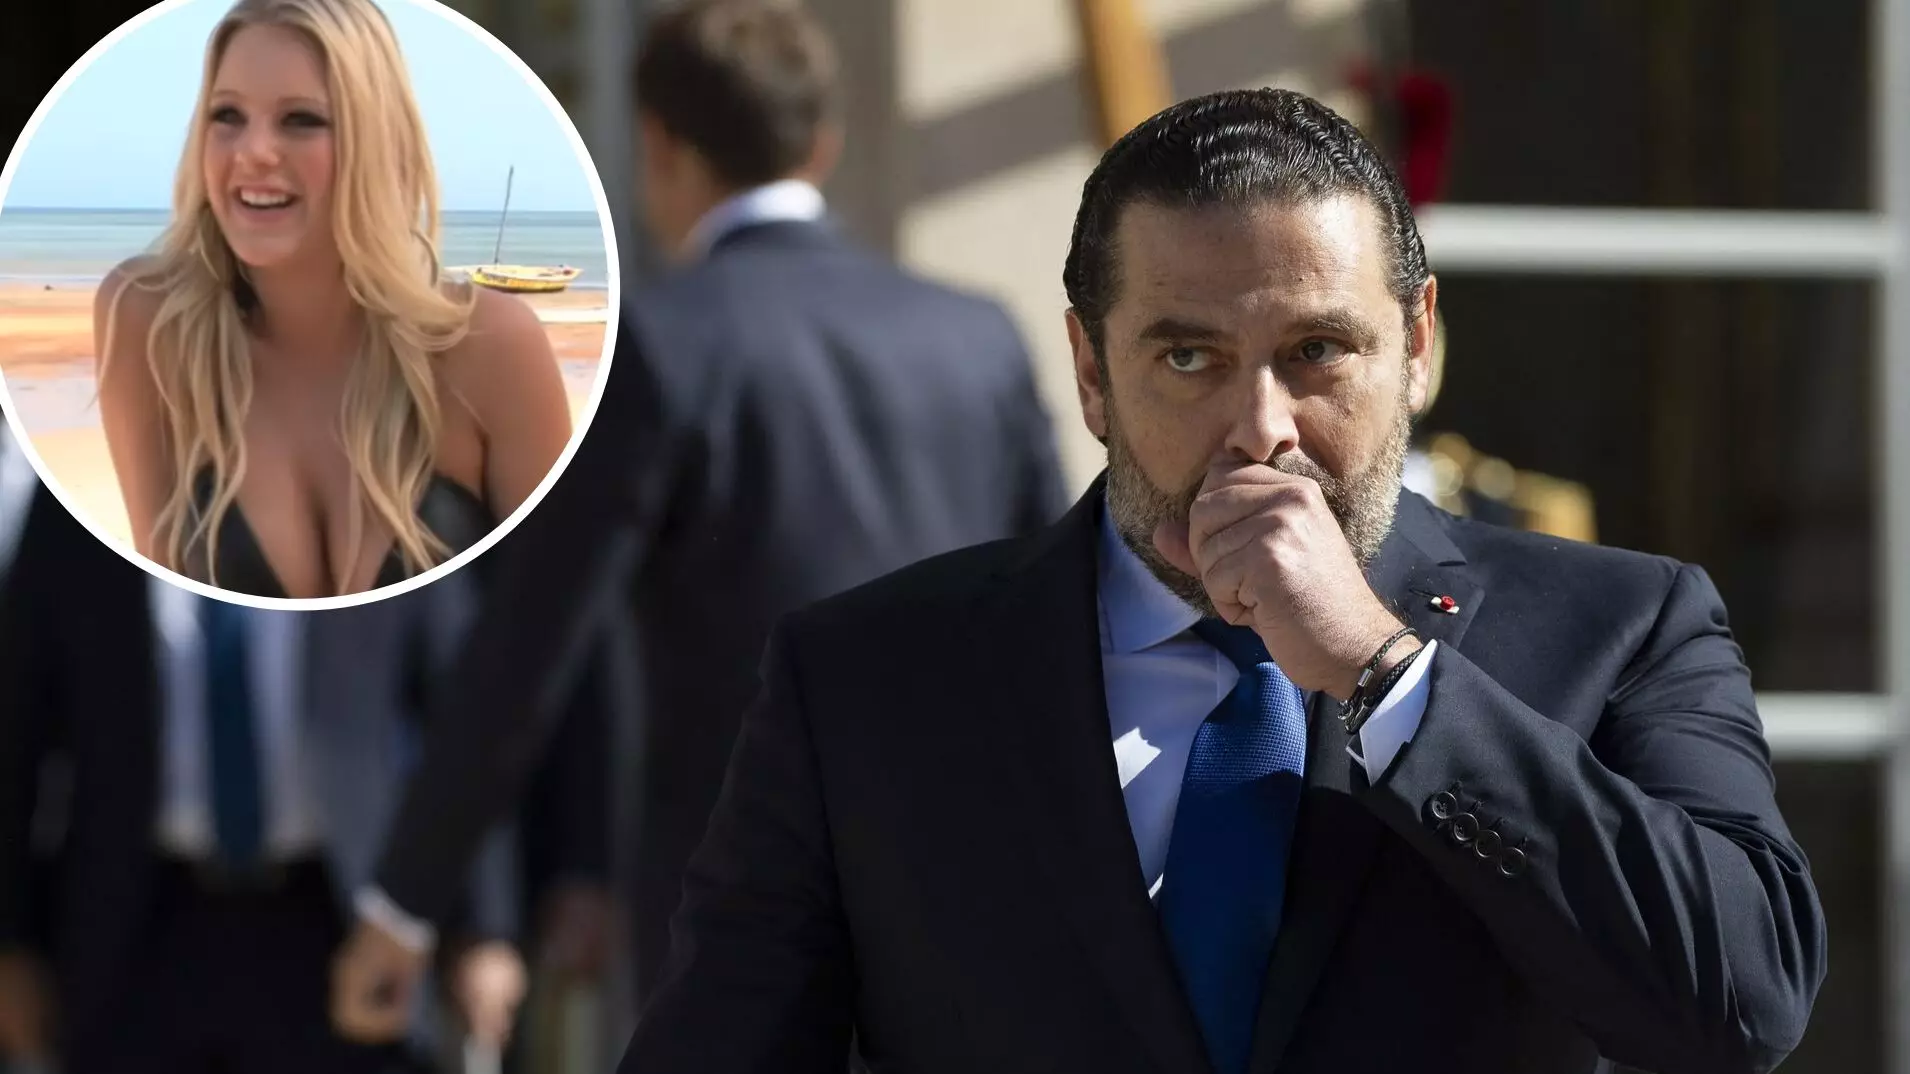 Married Lebanese Prime Minister Gifts $16 Million To Bikini Model